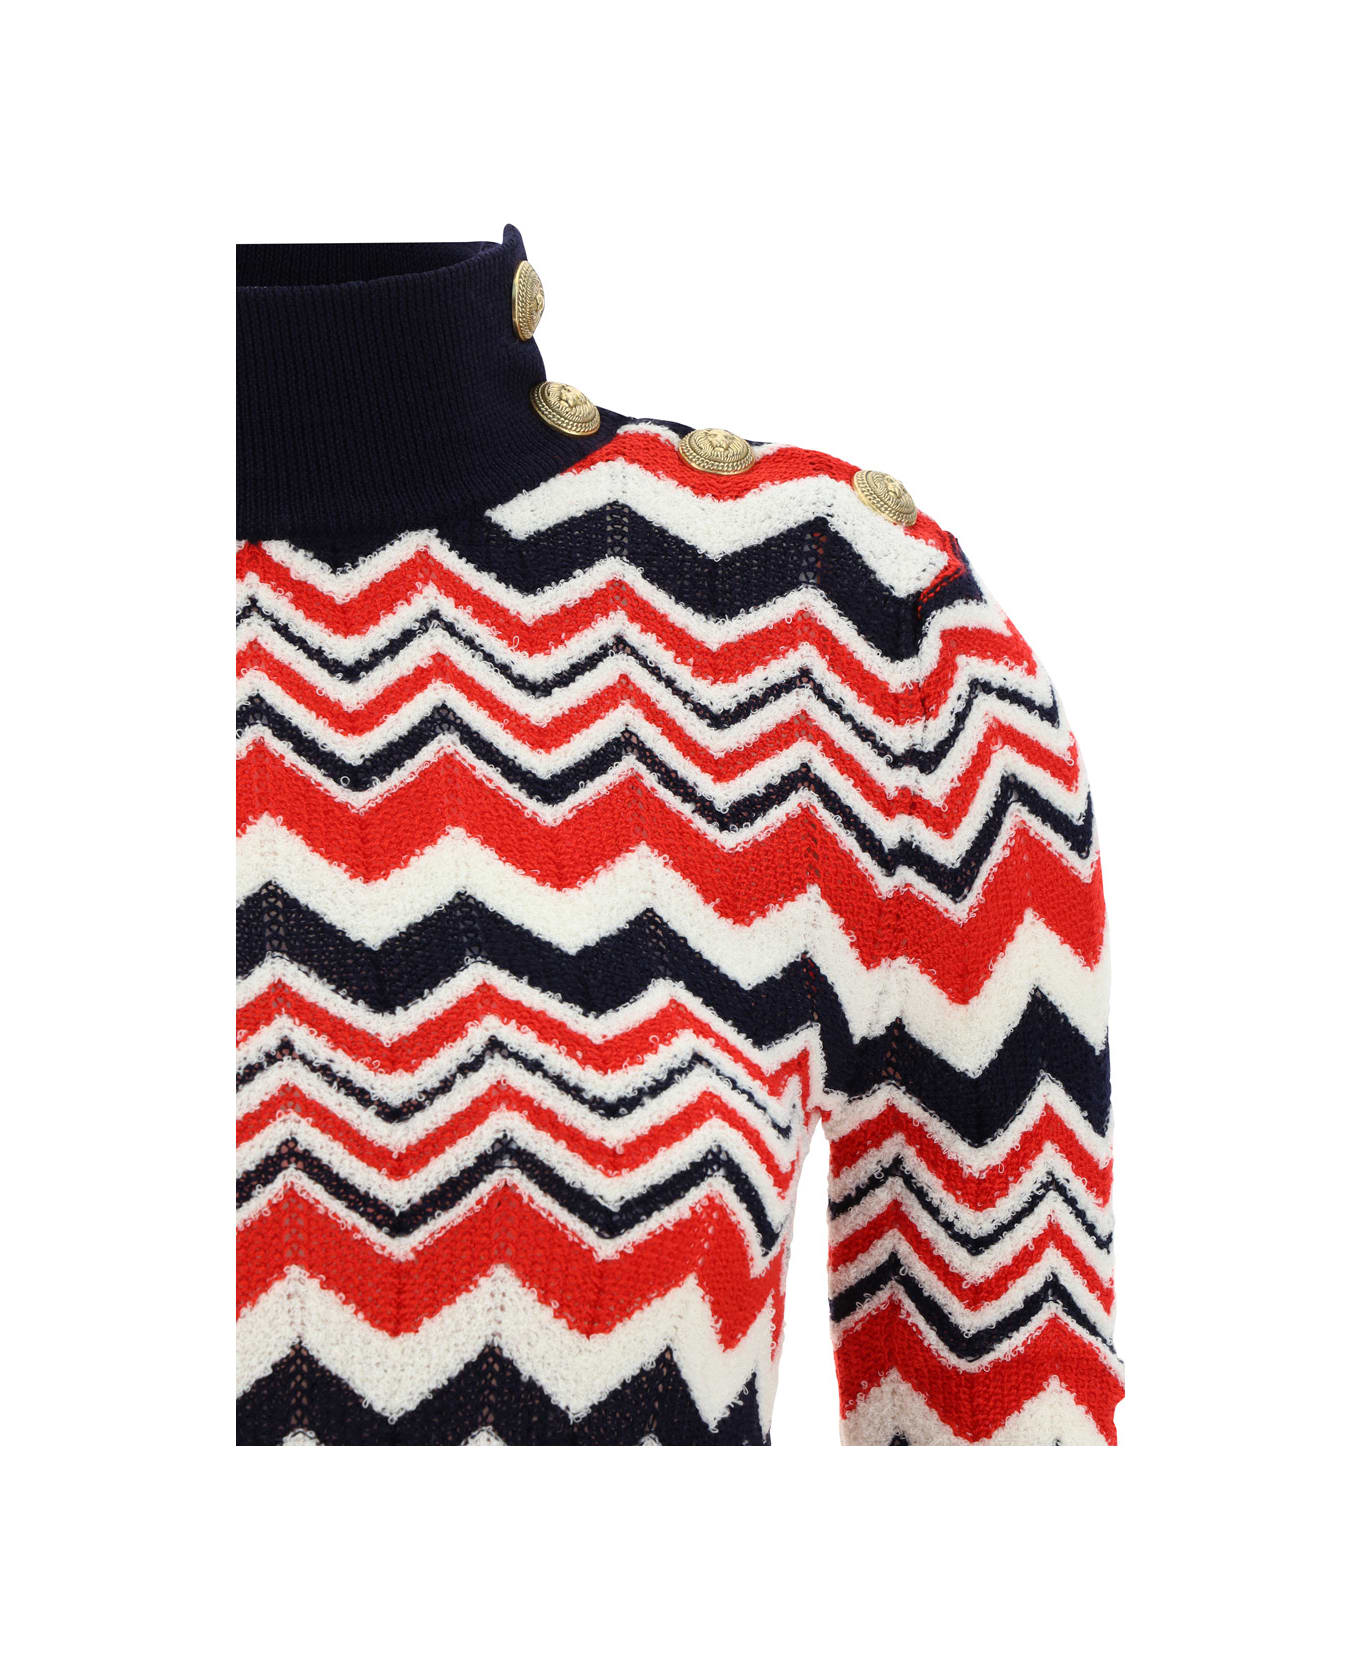 Balmain Turtleneck Sweater - Bleu Marine Fonce/blanc/rouge